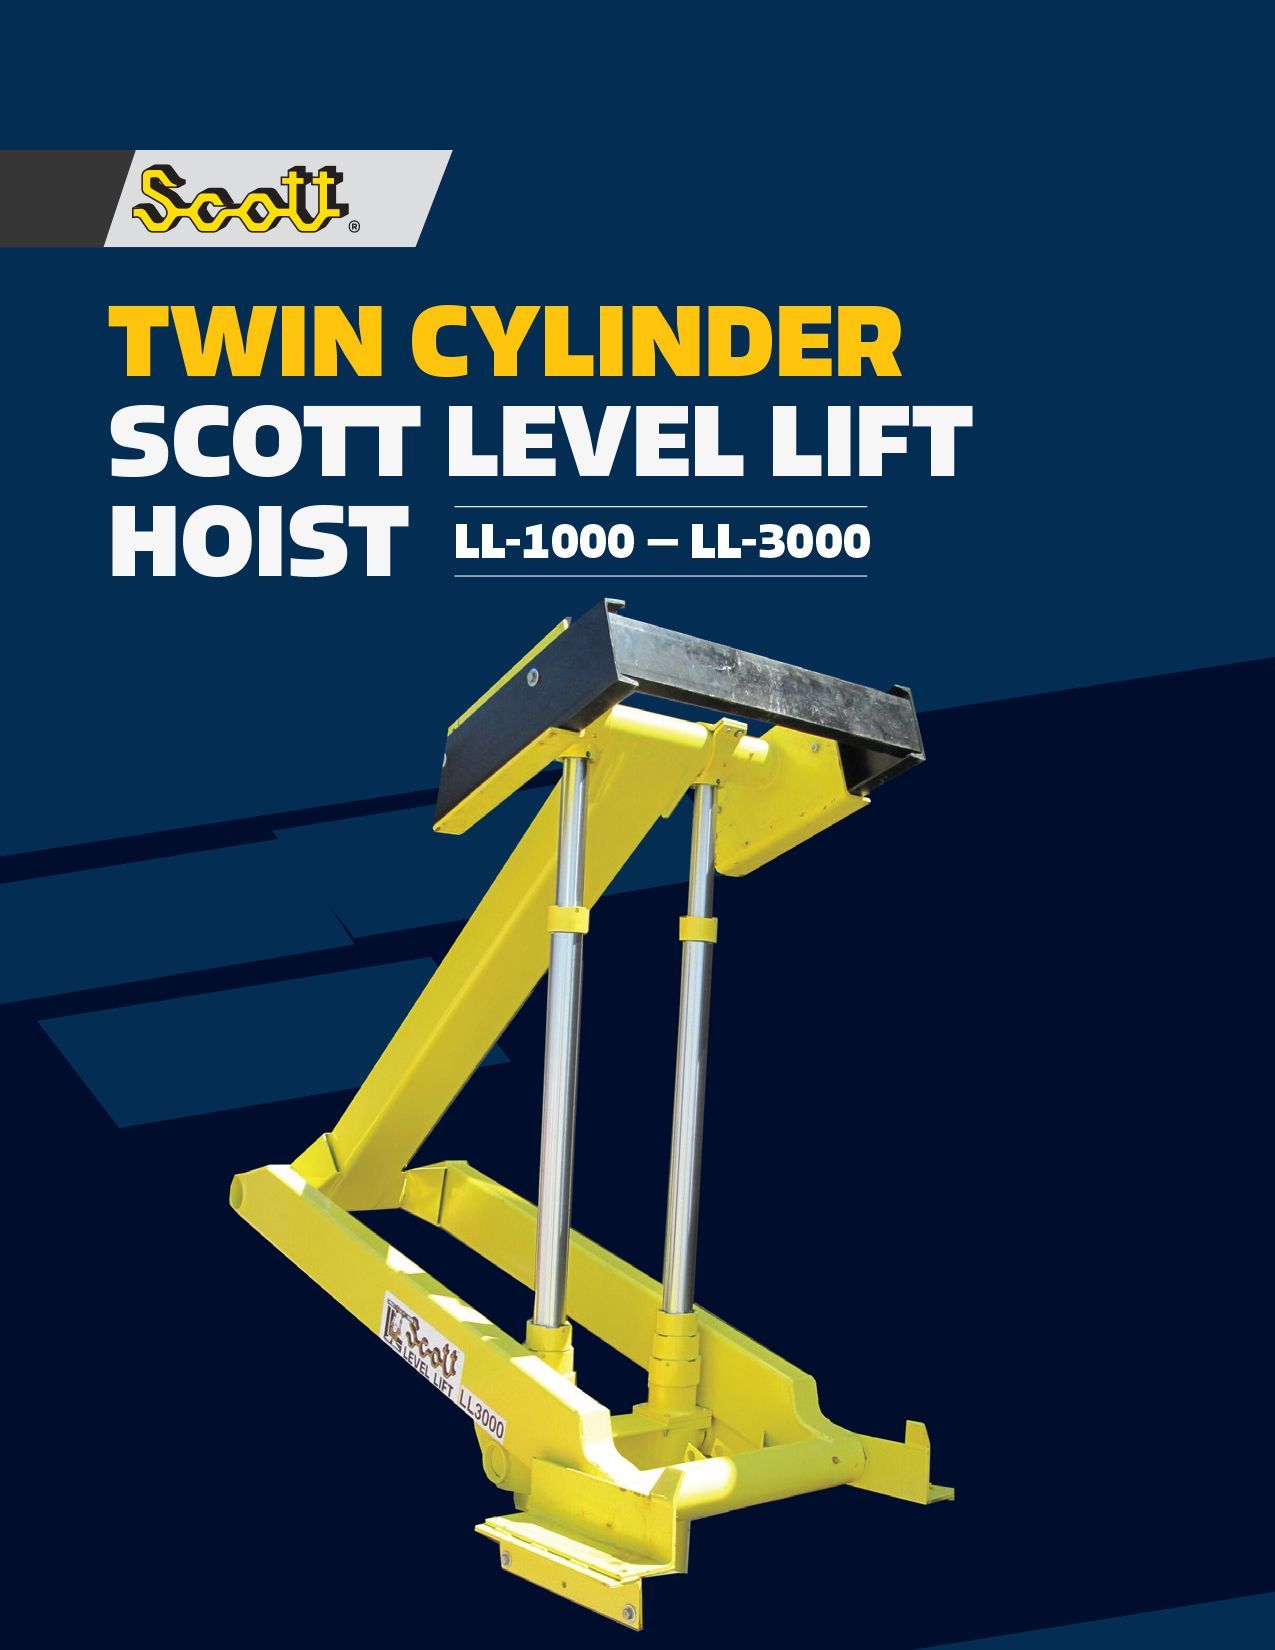 a yellow scott level lift hoist on a blue background